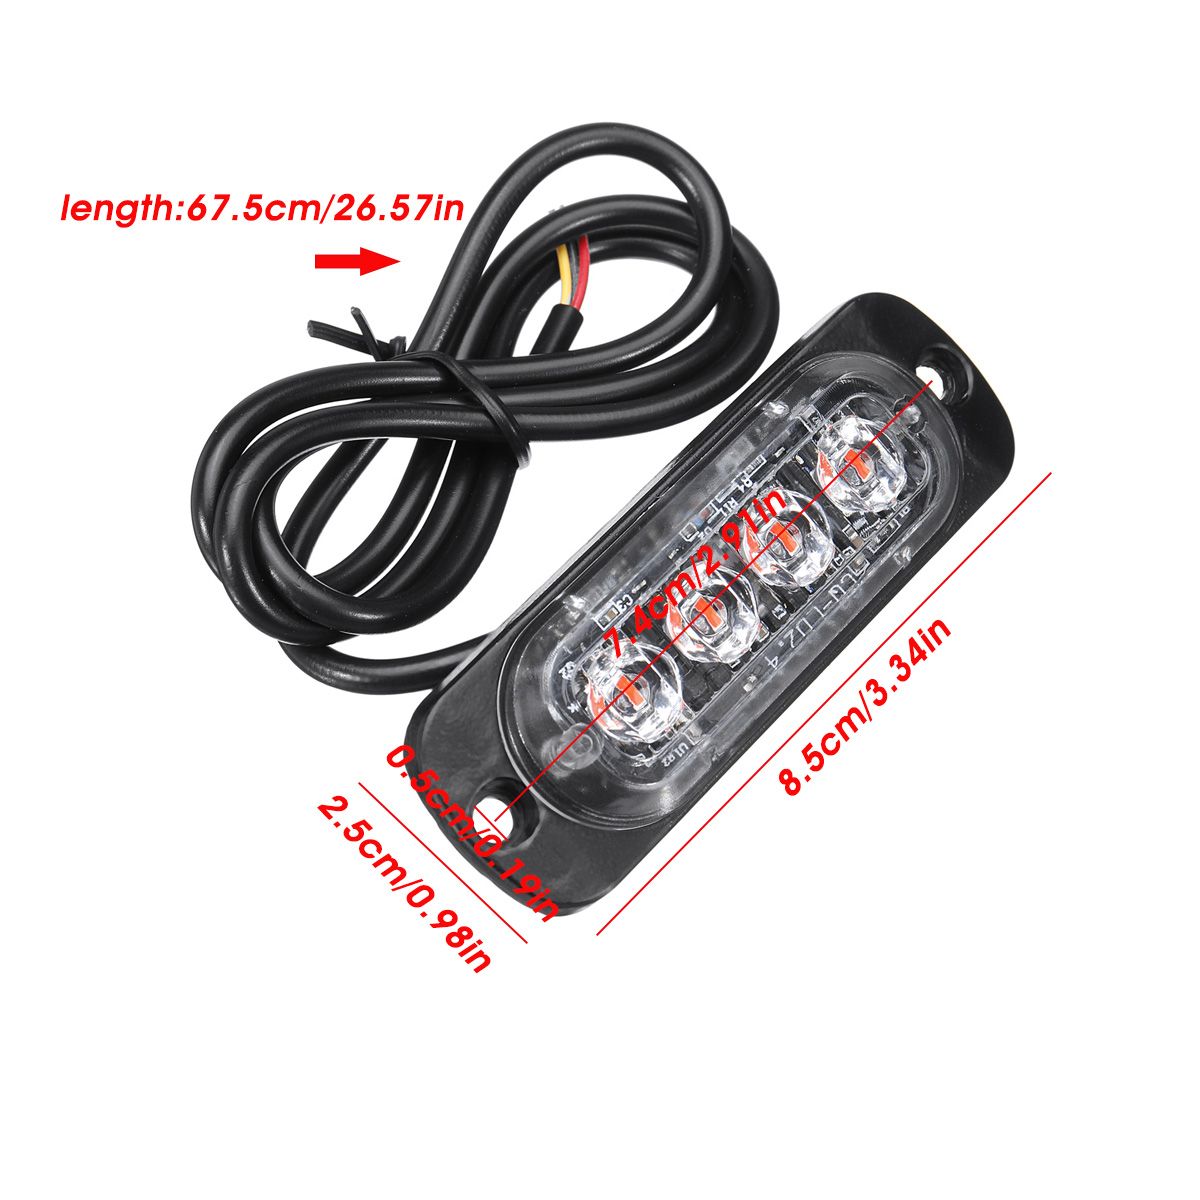 12W-4-LED-Flash-Strobe-Warning-Light-Emergency-Lamp-RedWhite-1224V-For-Car-Truck-Motorcycle-1553112